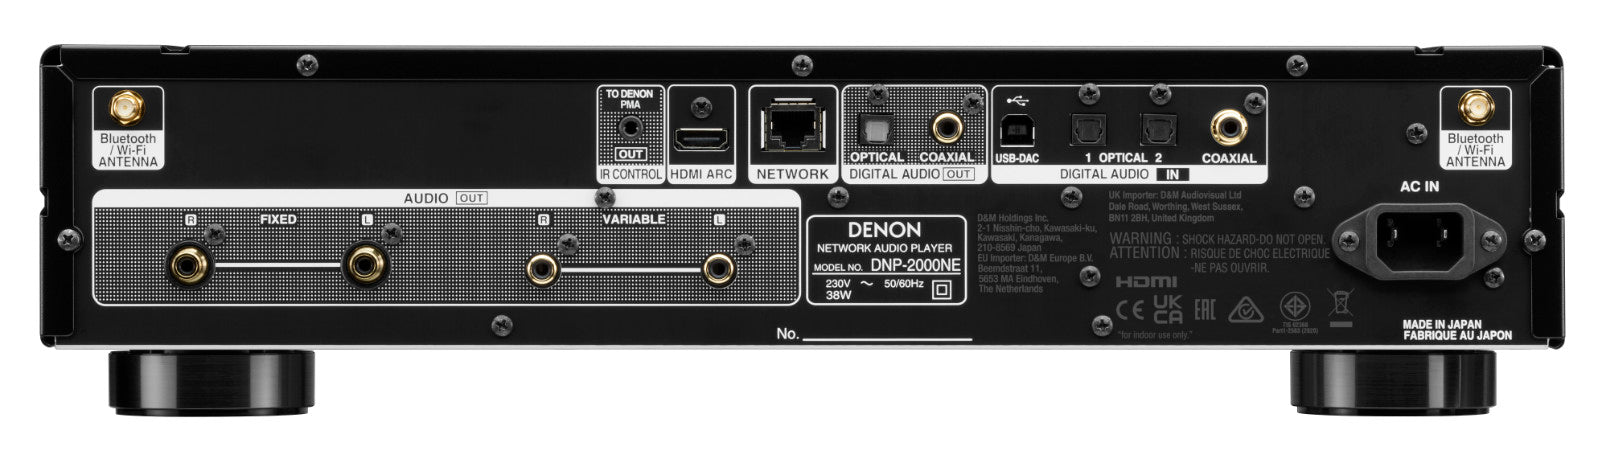 Denon DNP-2000NE network player